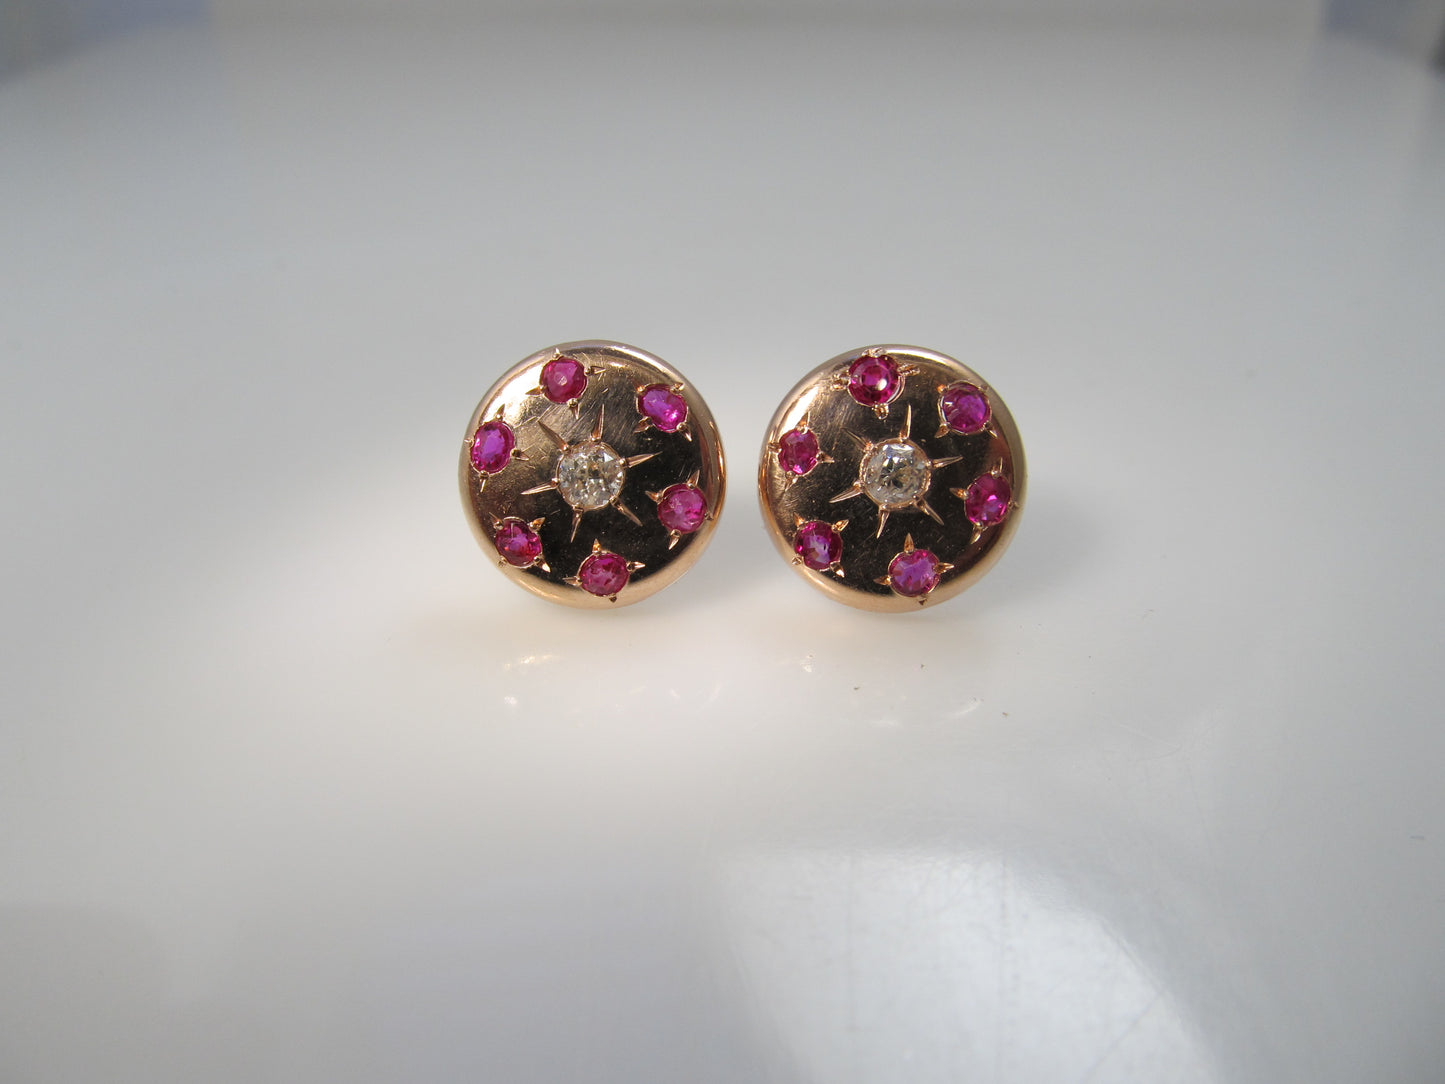 Antique 14k rose gold ruby and diamodn earrings